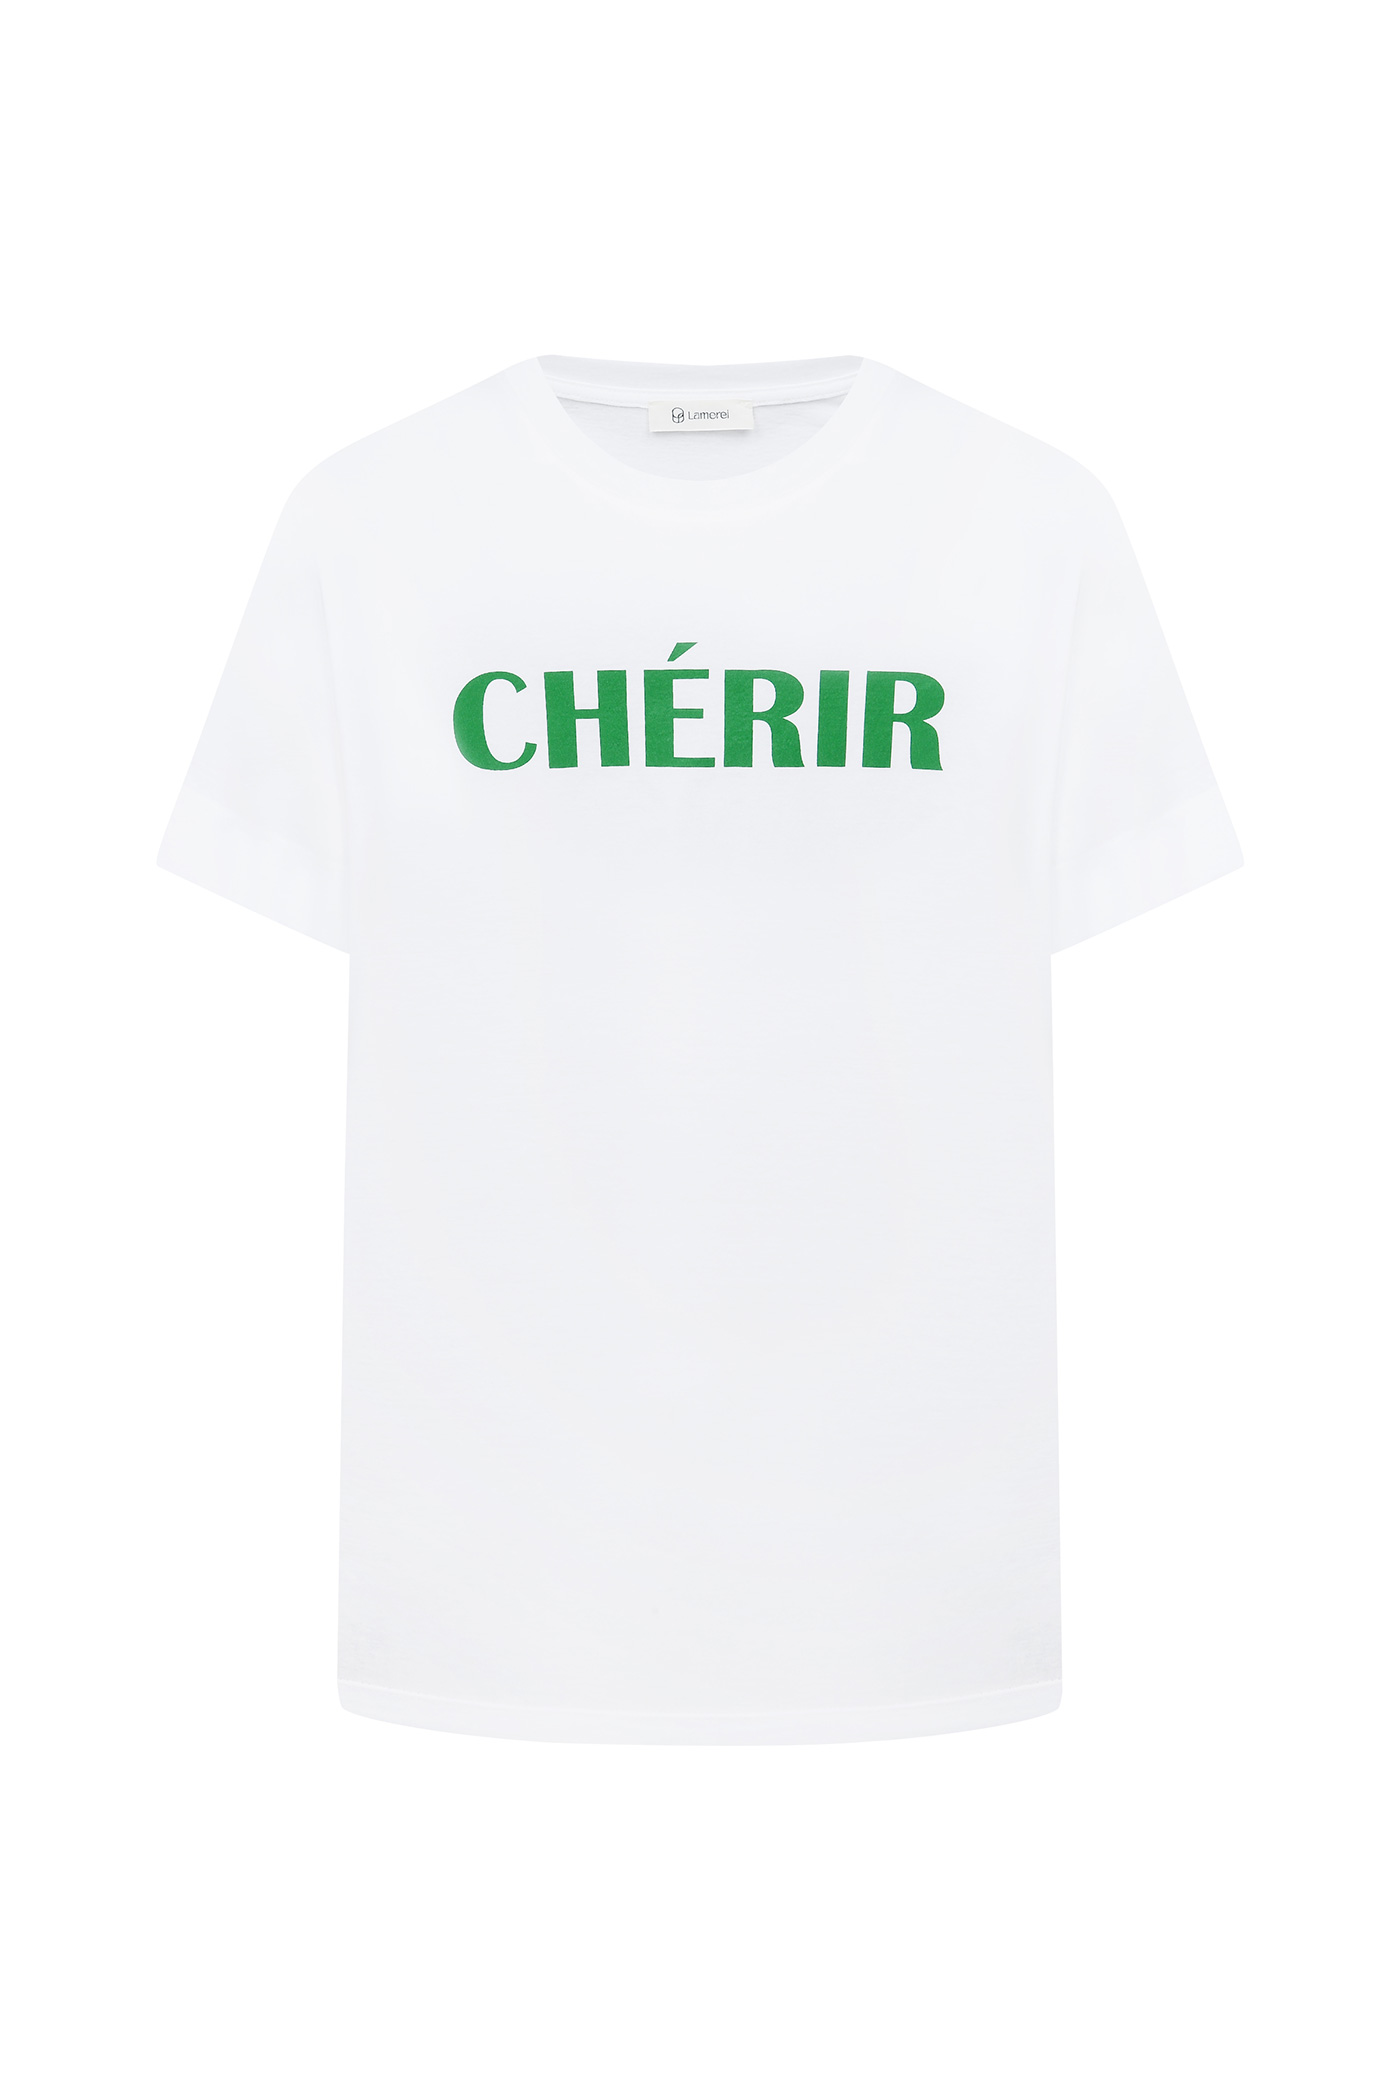 CHERIR Top-Green